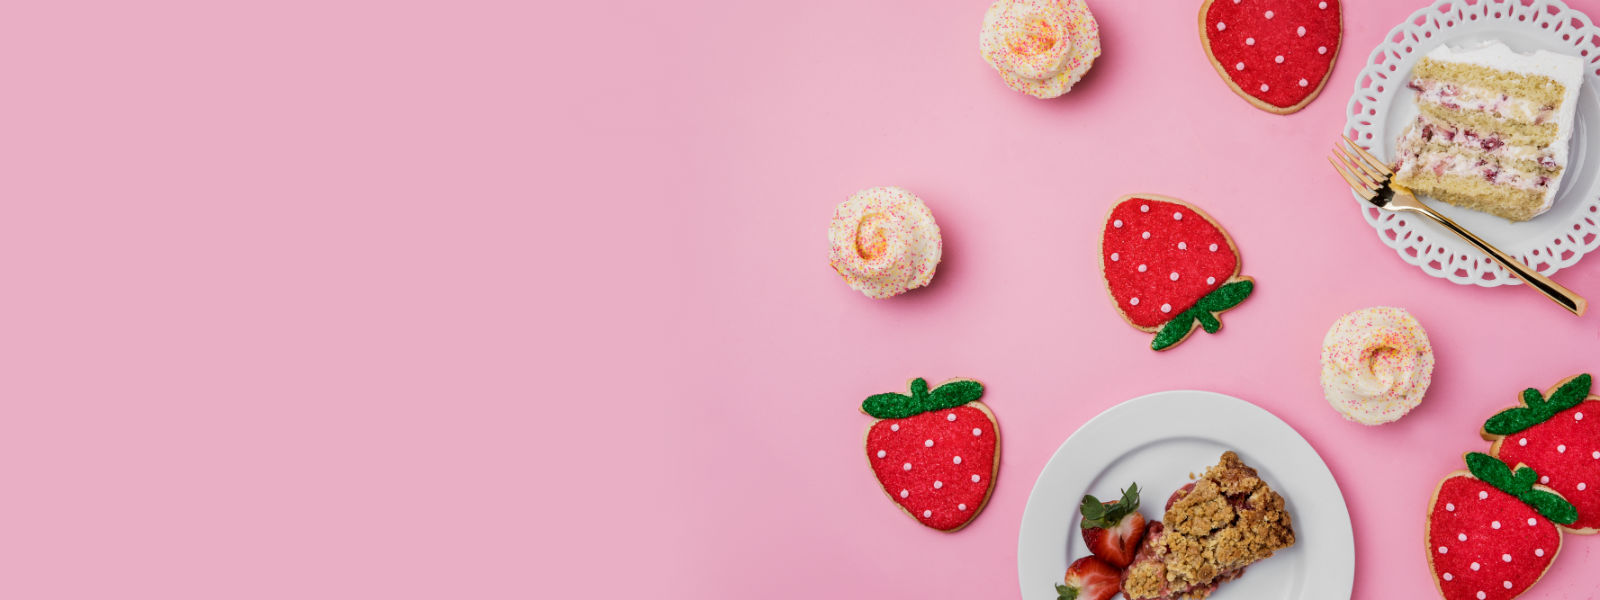 strawberry-season-banner.jpg